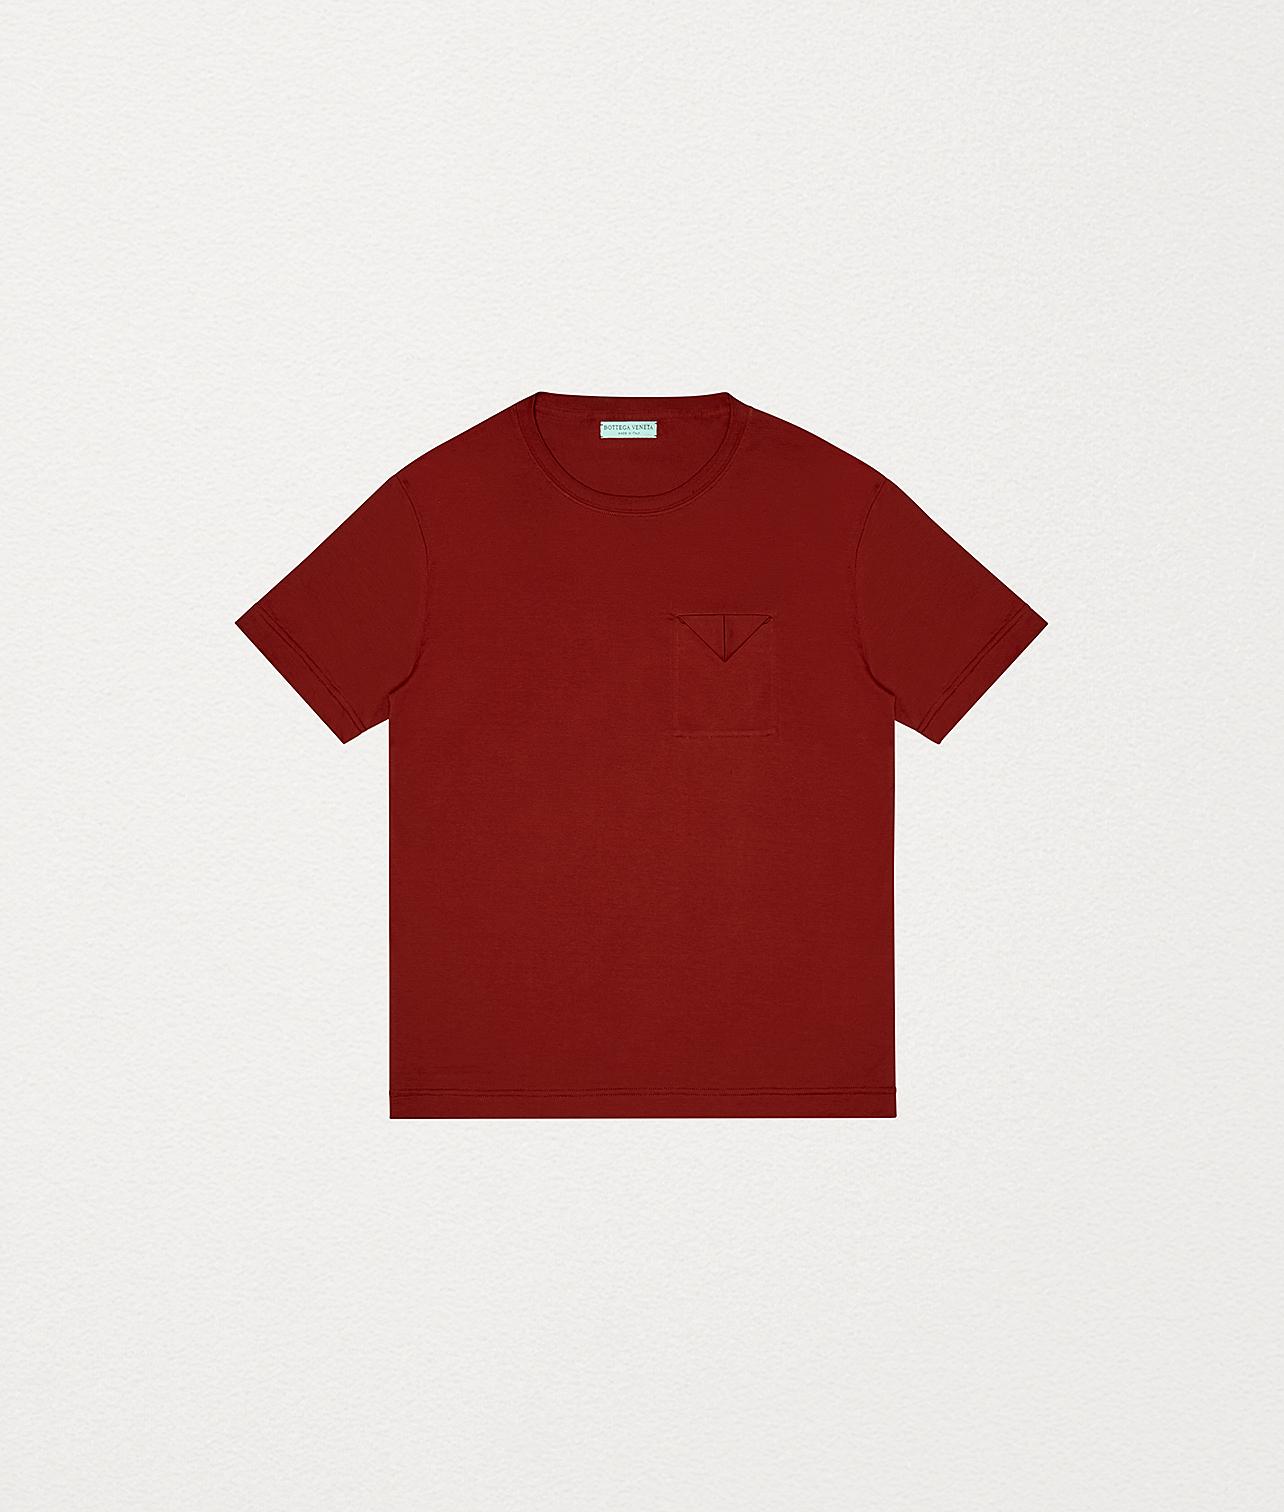 Bottega Veneta T-shirt In Cotton Jersey in Red for Men - Lyst